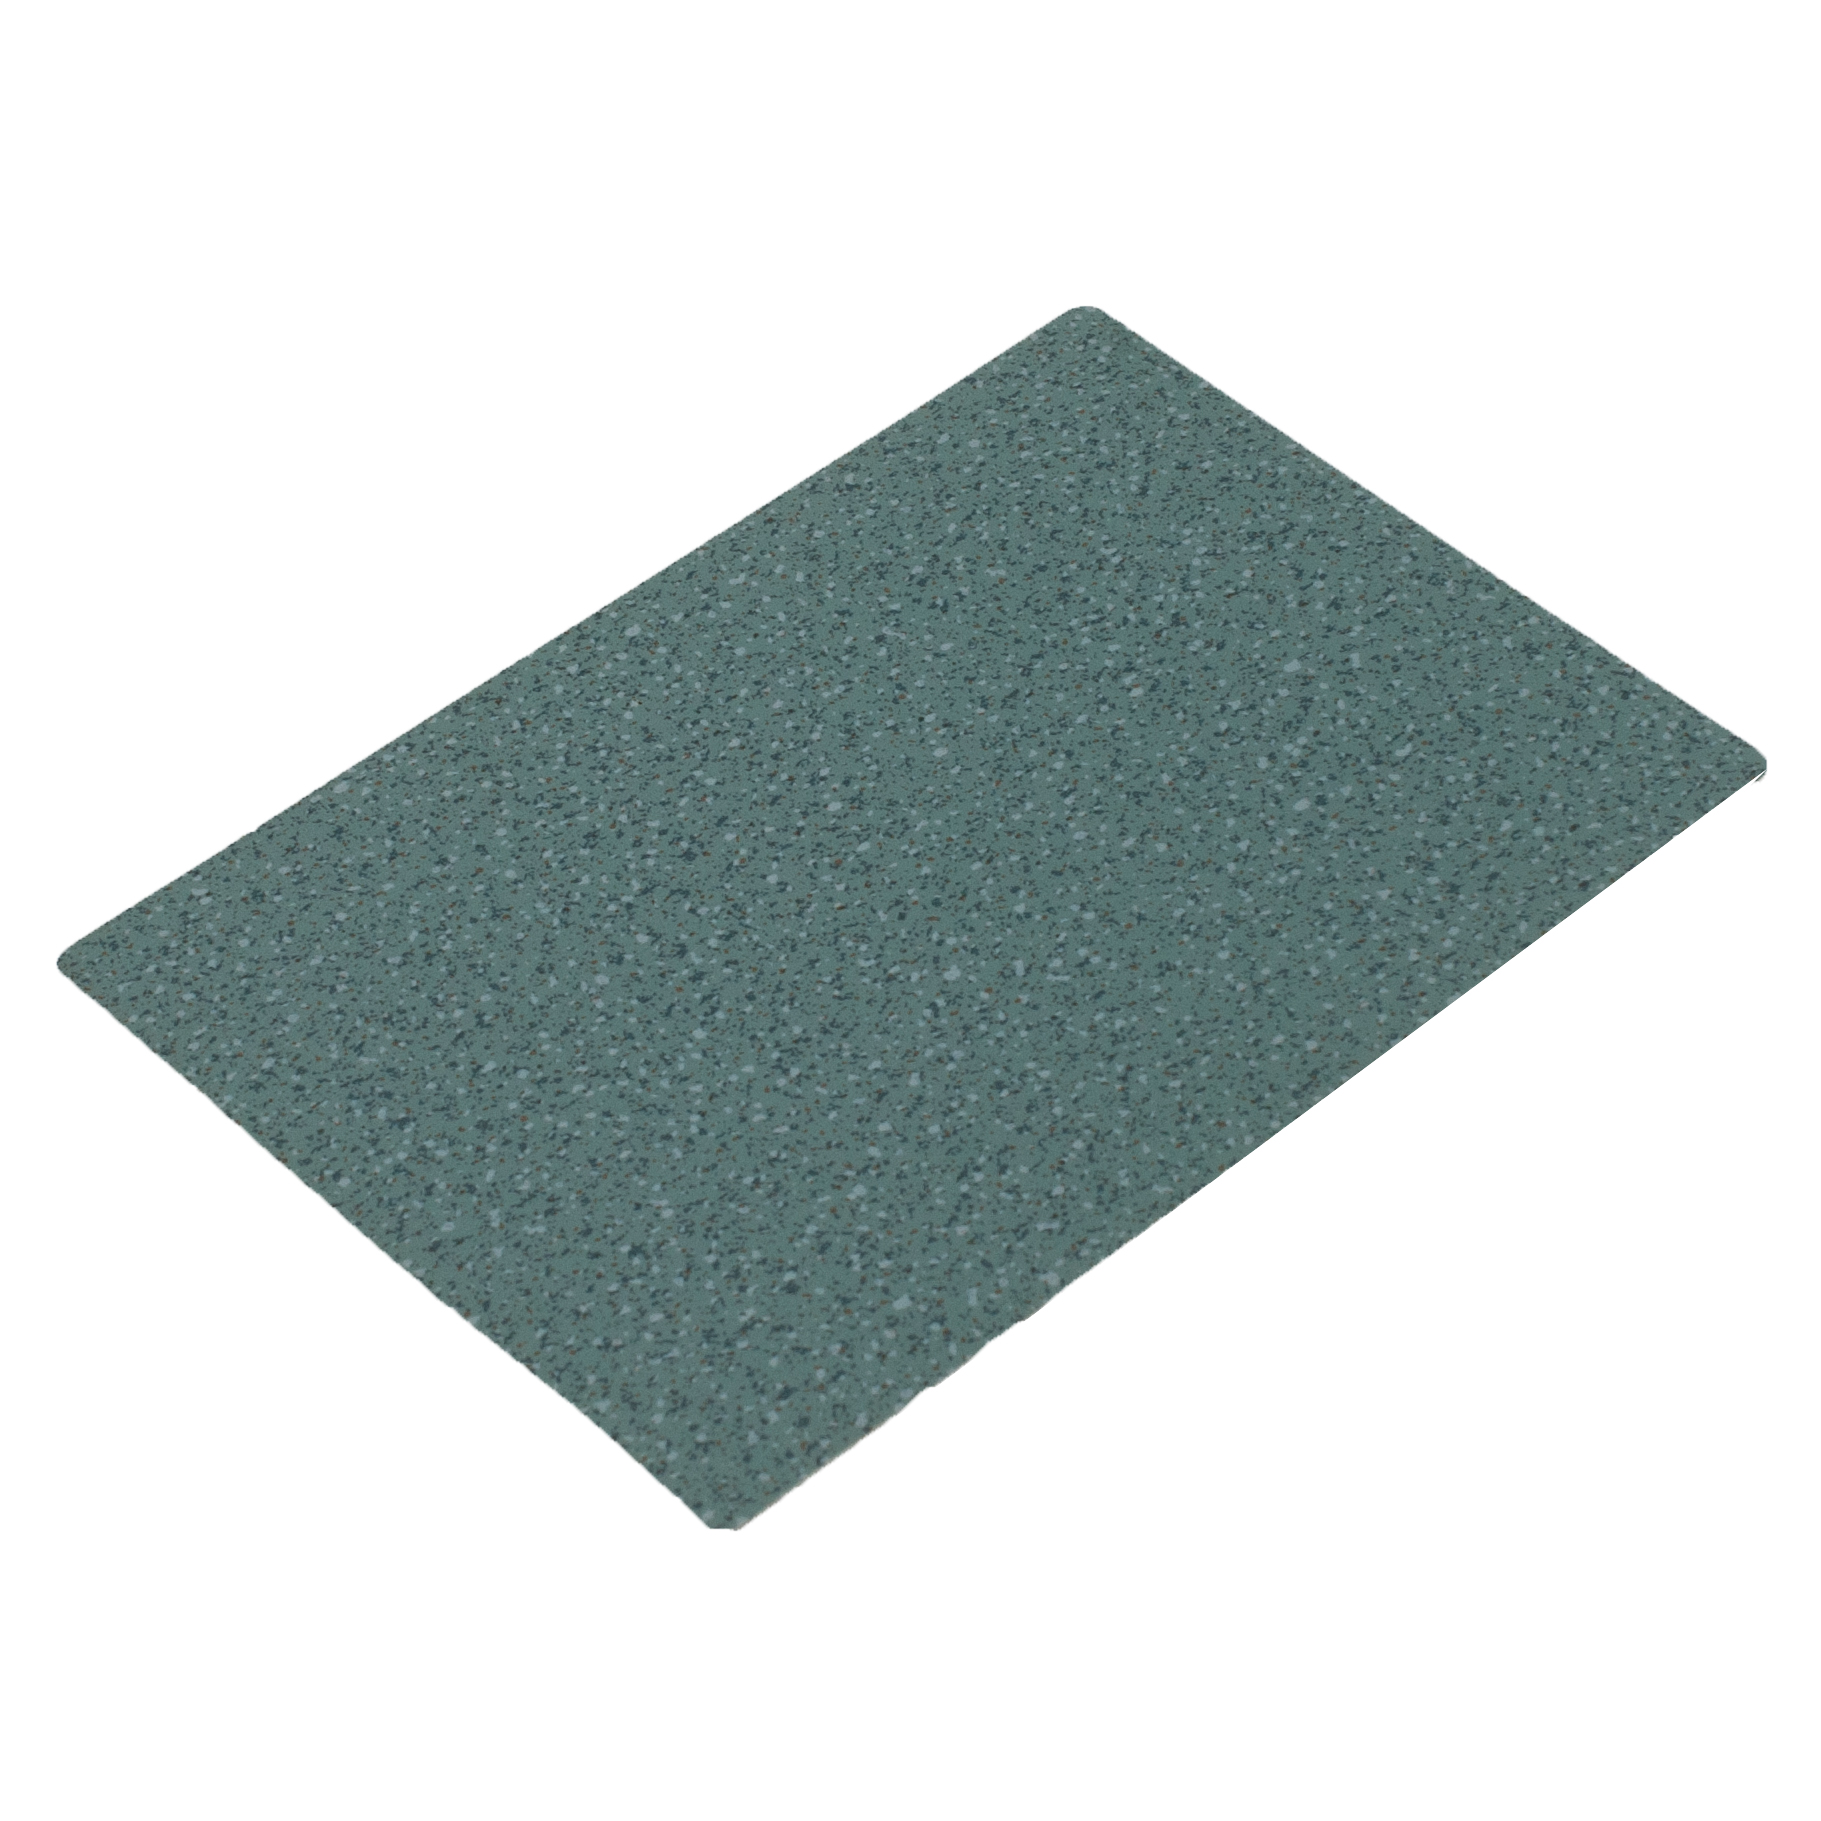 Green 4mm PVC Flooring For Garage